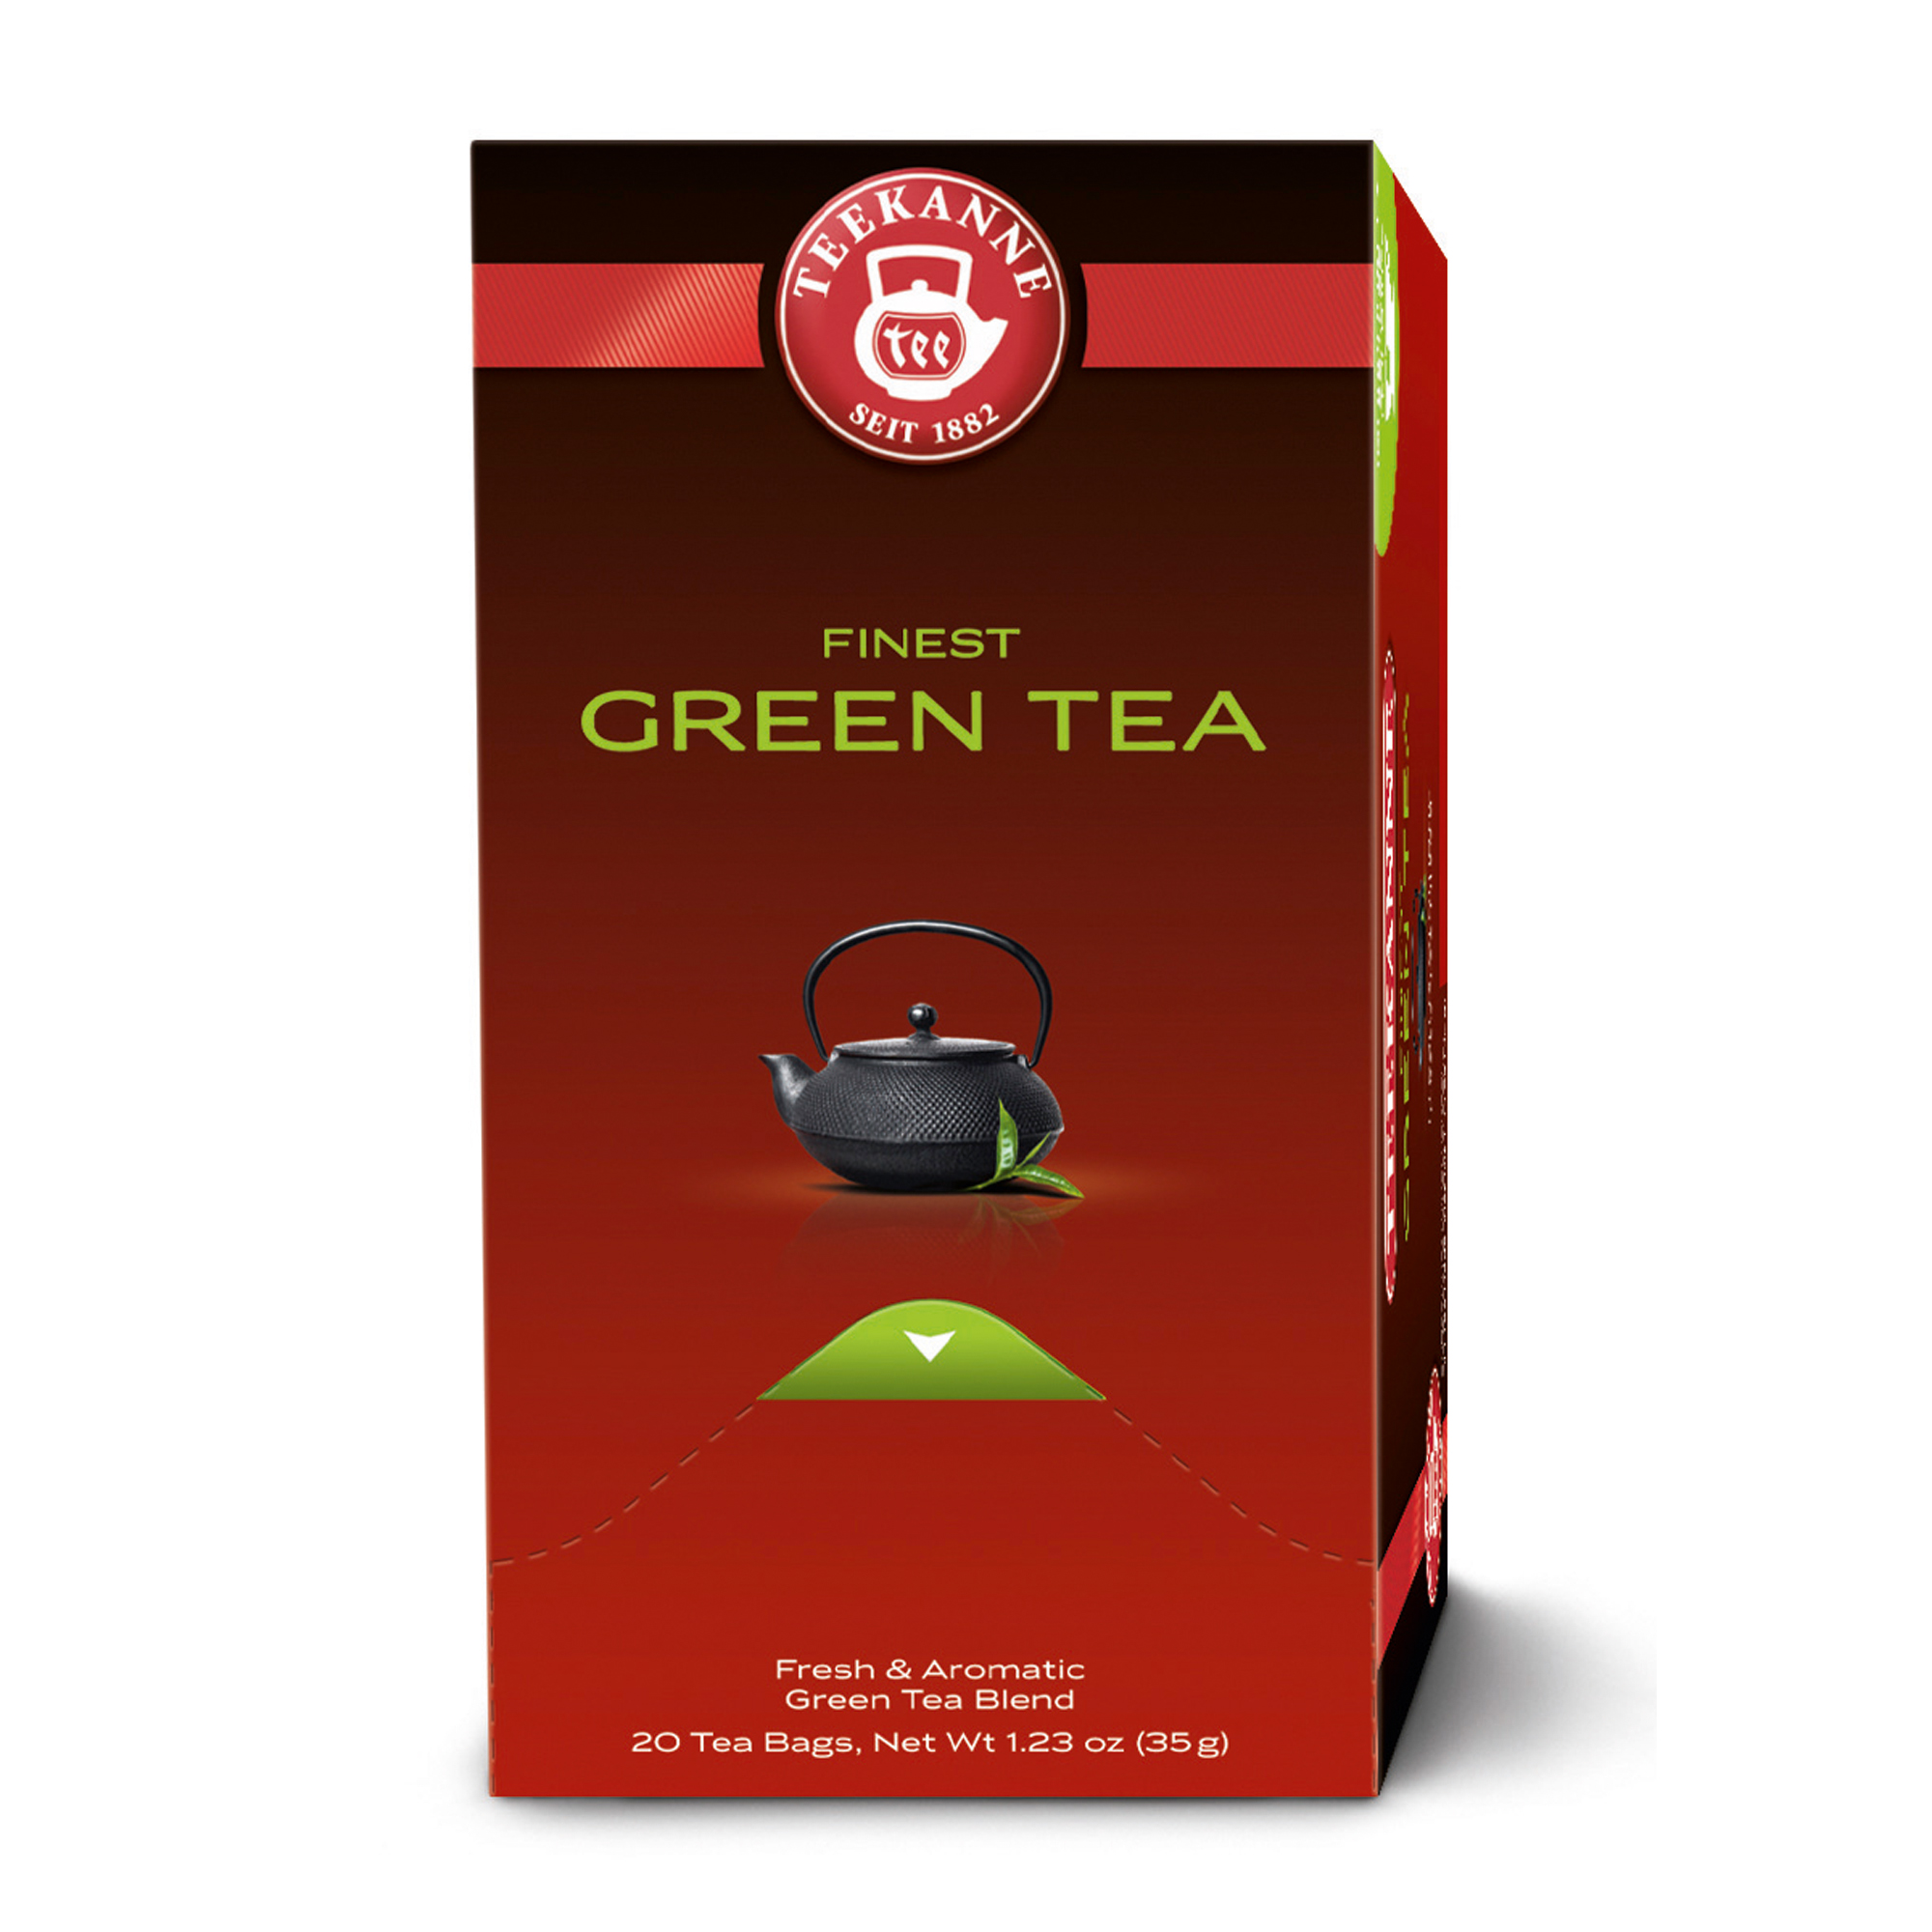 Teekanne Tee Premium Green Tea